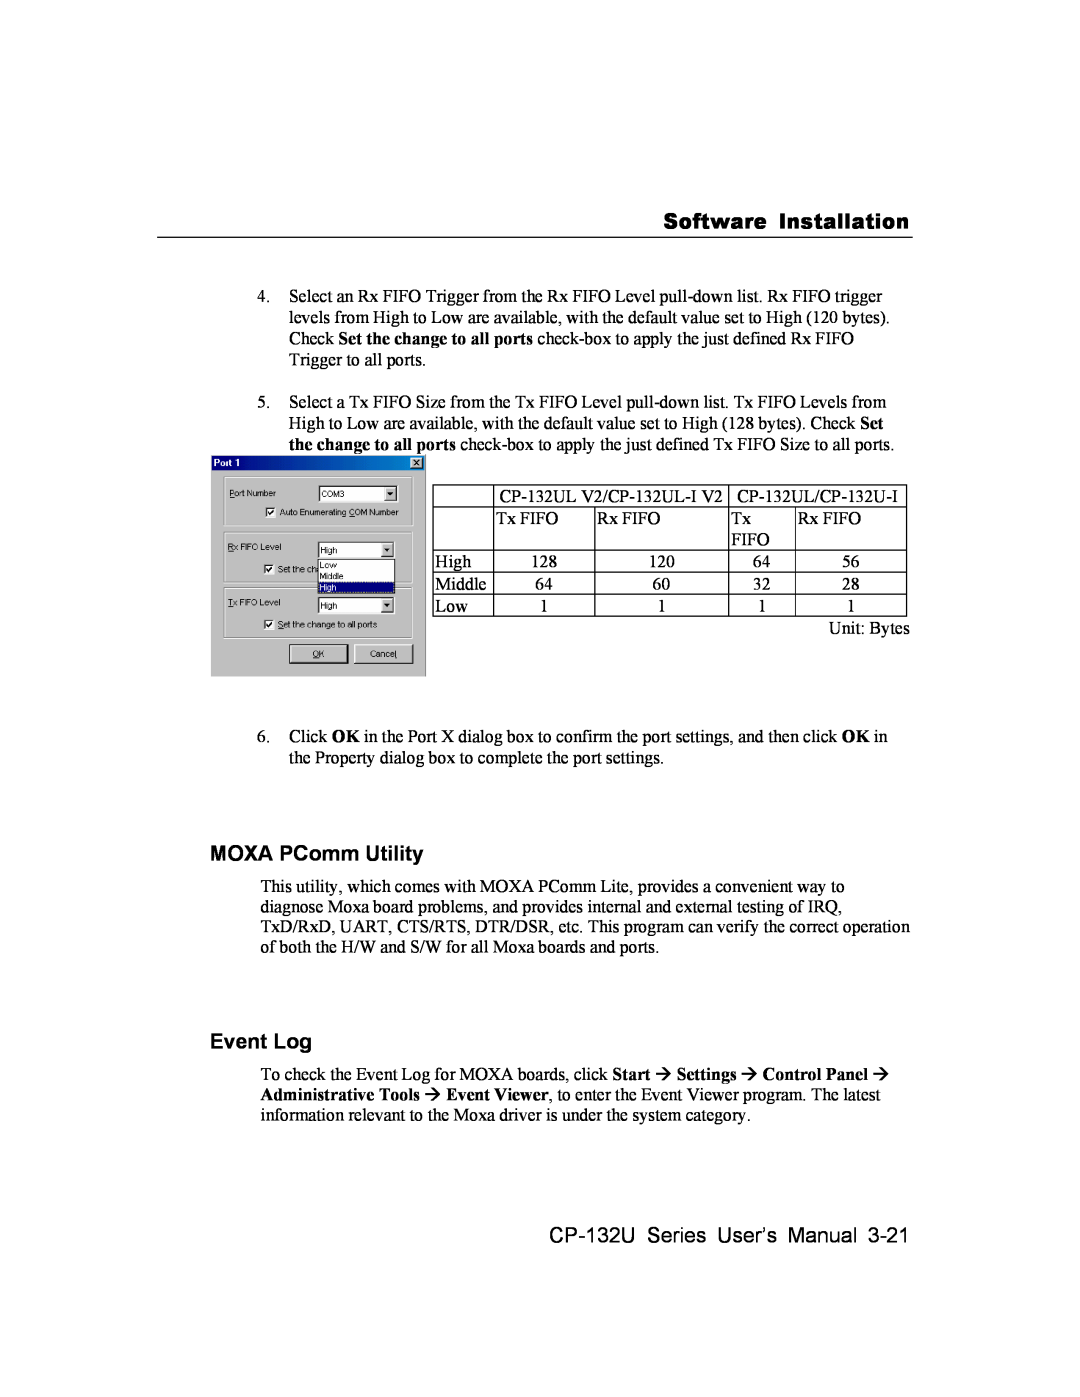 Moxa Technologies user manual MOXA PComm Utility, Event Log, Software Installation, CP-132U Series User’s Manual 